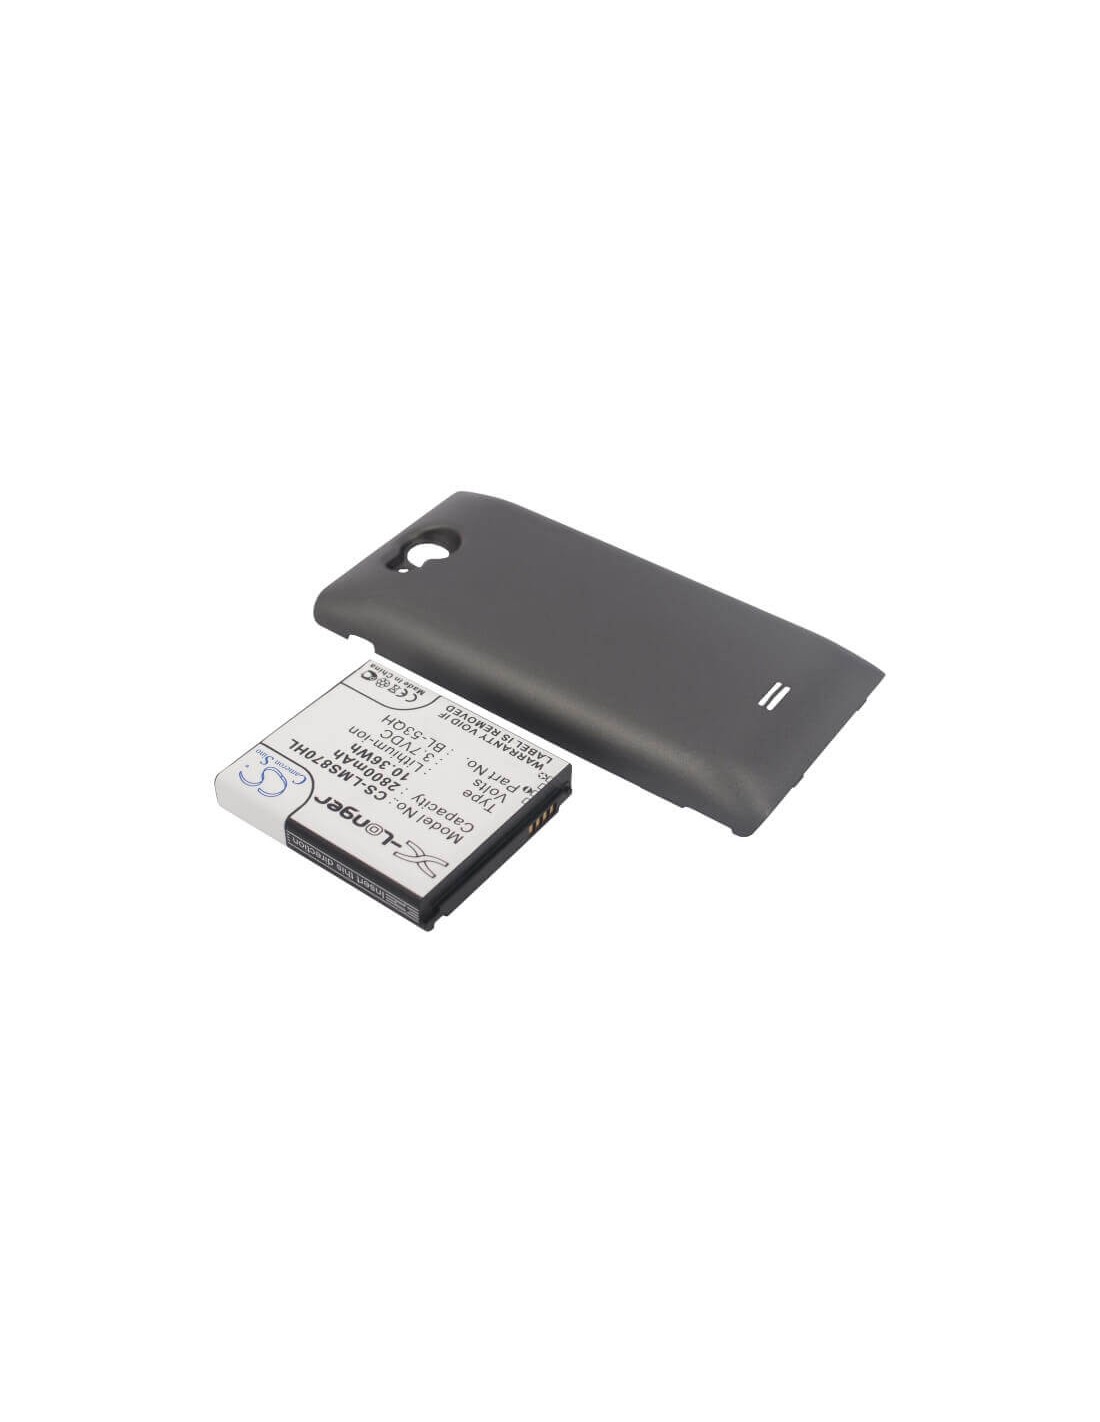 Battery for LG MS870, LGMS870 3.7V, 2800mAh - 10.36Wh